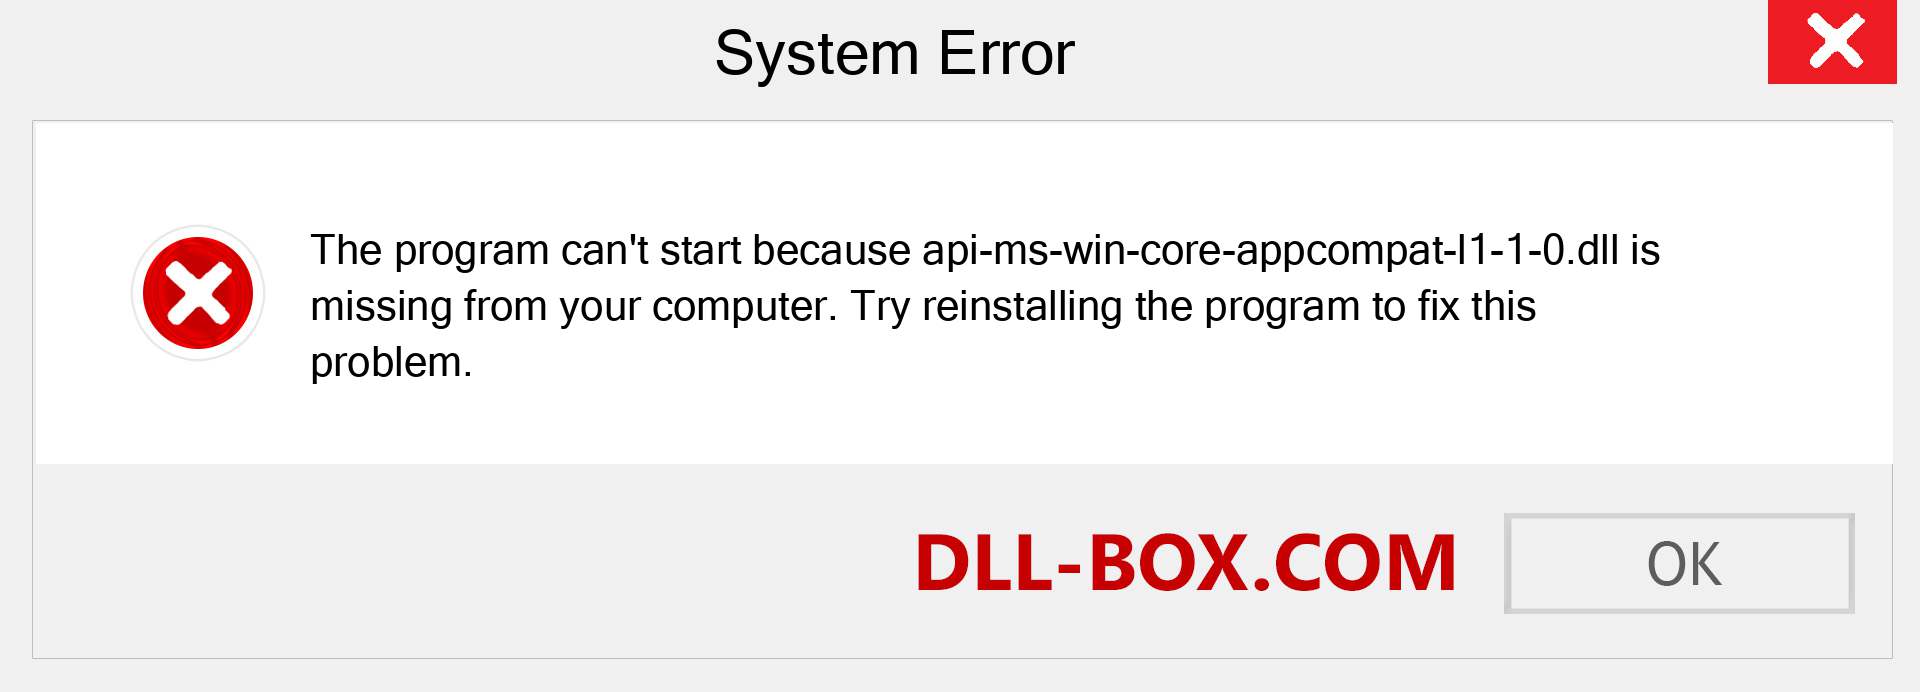  api-ms-win-core-appcompat-l1-1-0.dll file is missing?. Download for Windows 7, 8, 10 - Fix  api-ms-win-core-appcompat-l1-1-0 dll Missing Error on Windows, photos, images